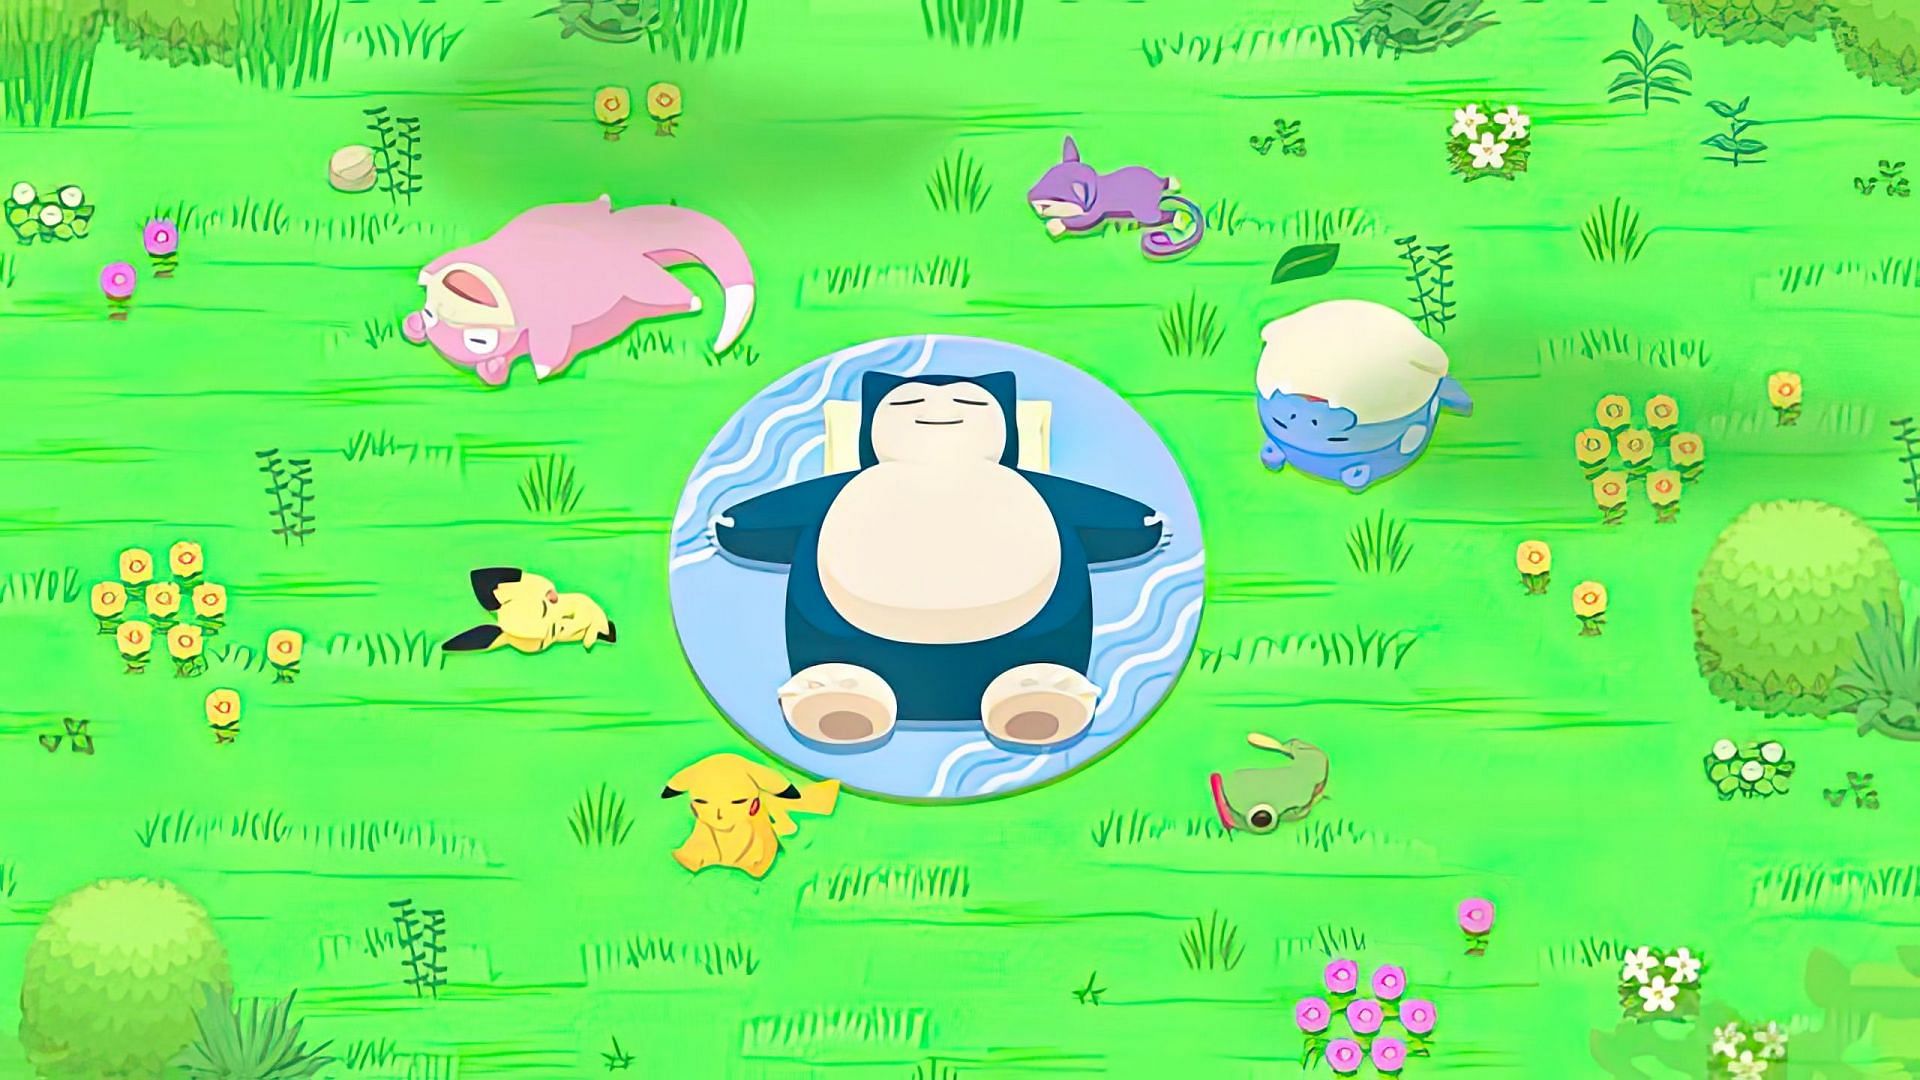 Pokemon sleeping in the game (Image via The Pokemon Company)